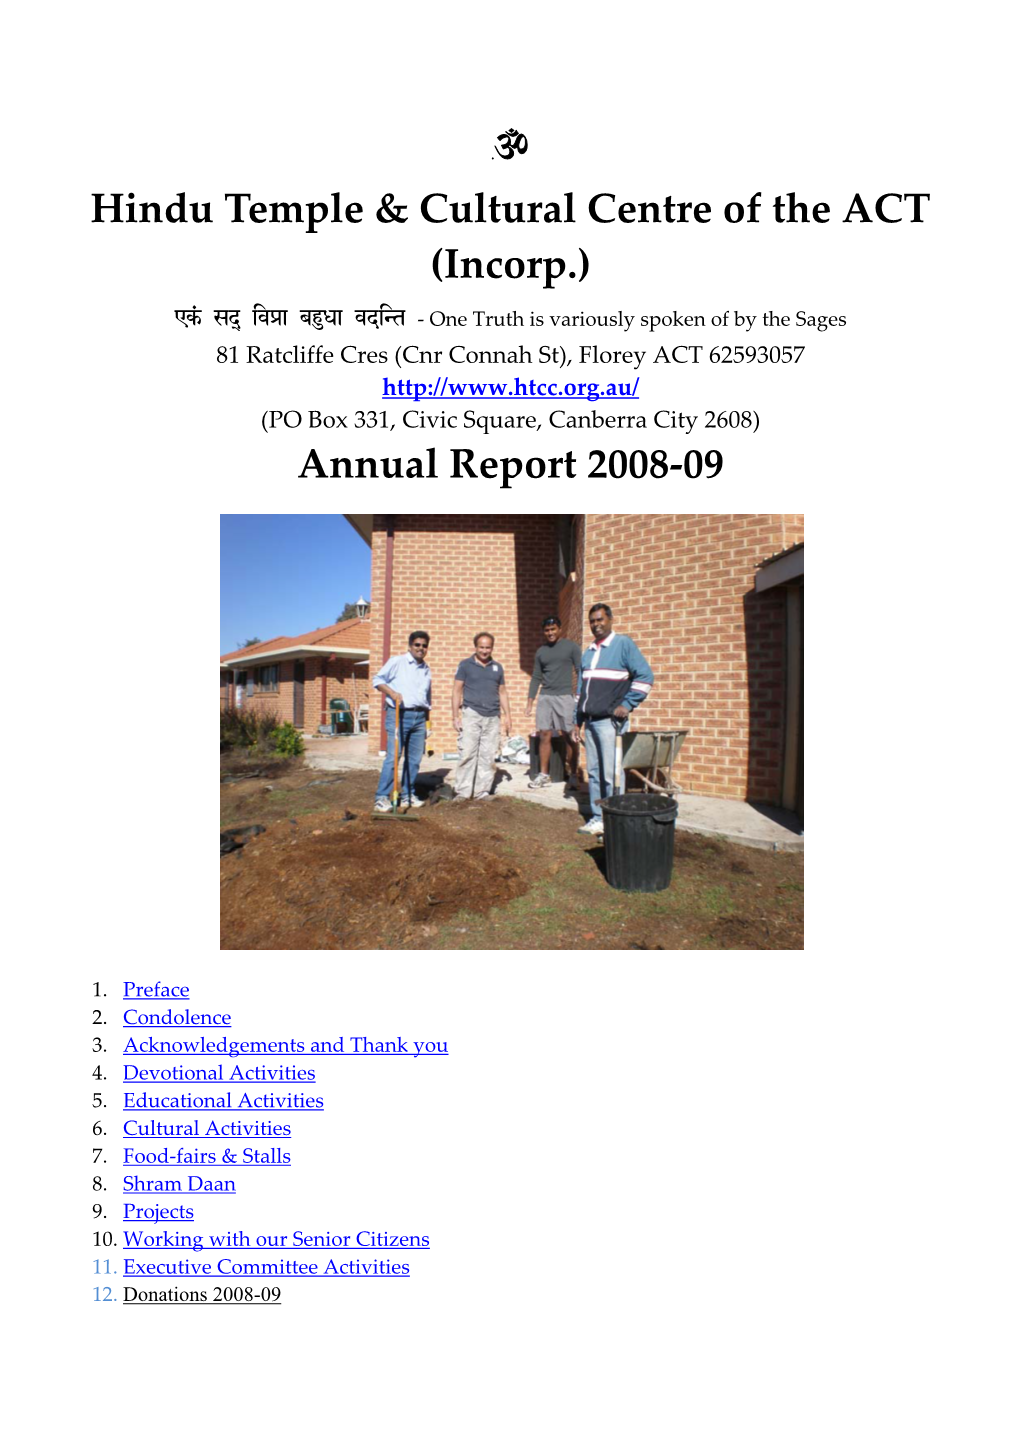 (Incorp.) Annual Report 2008-09